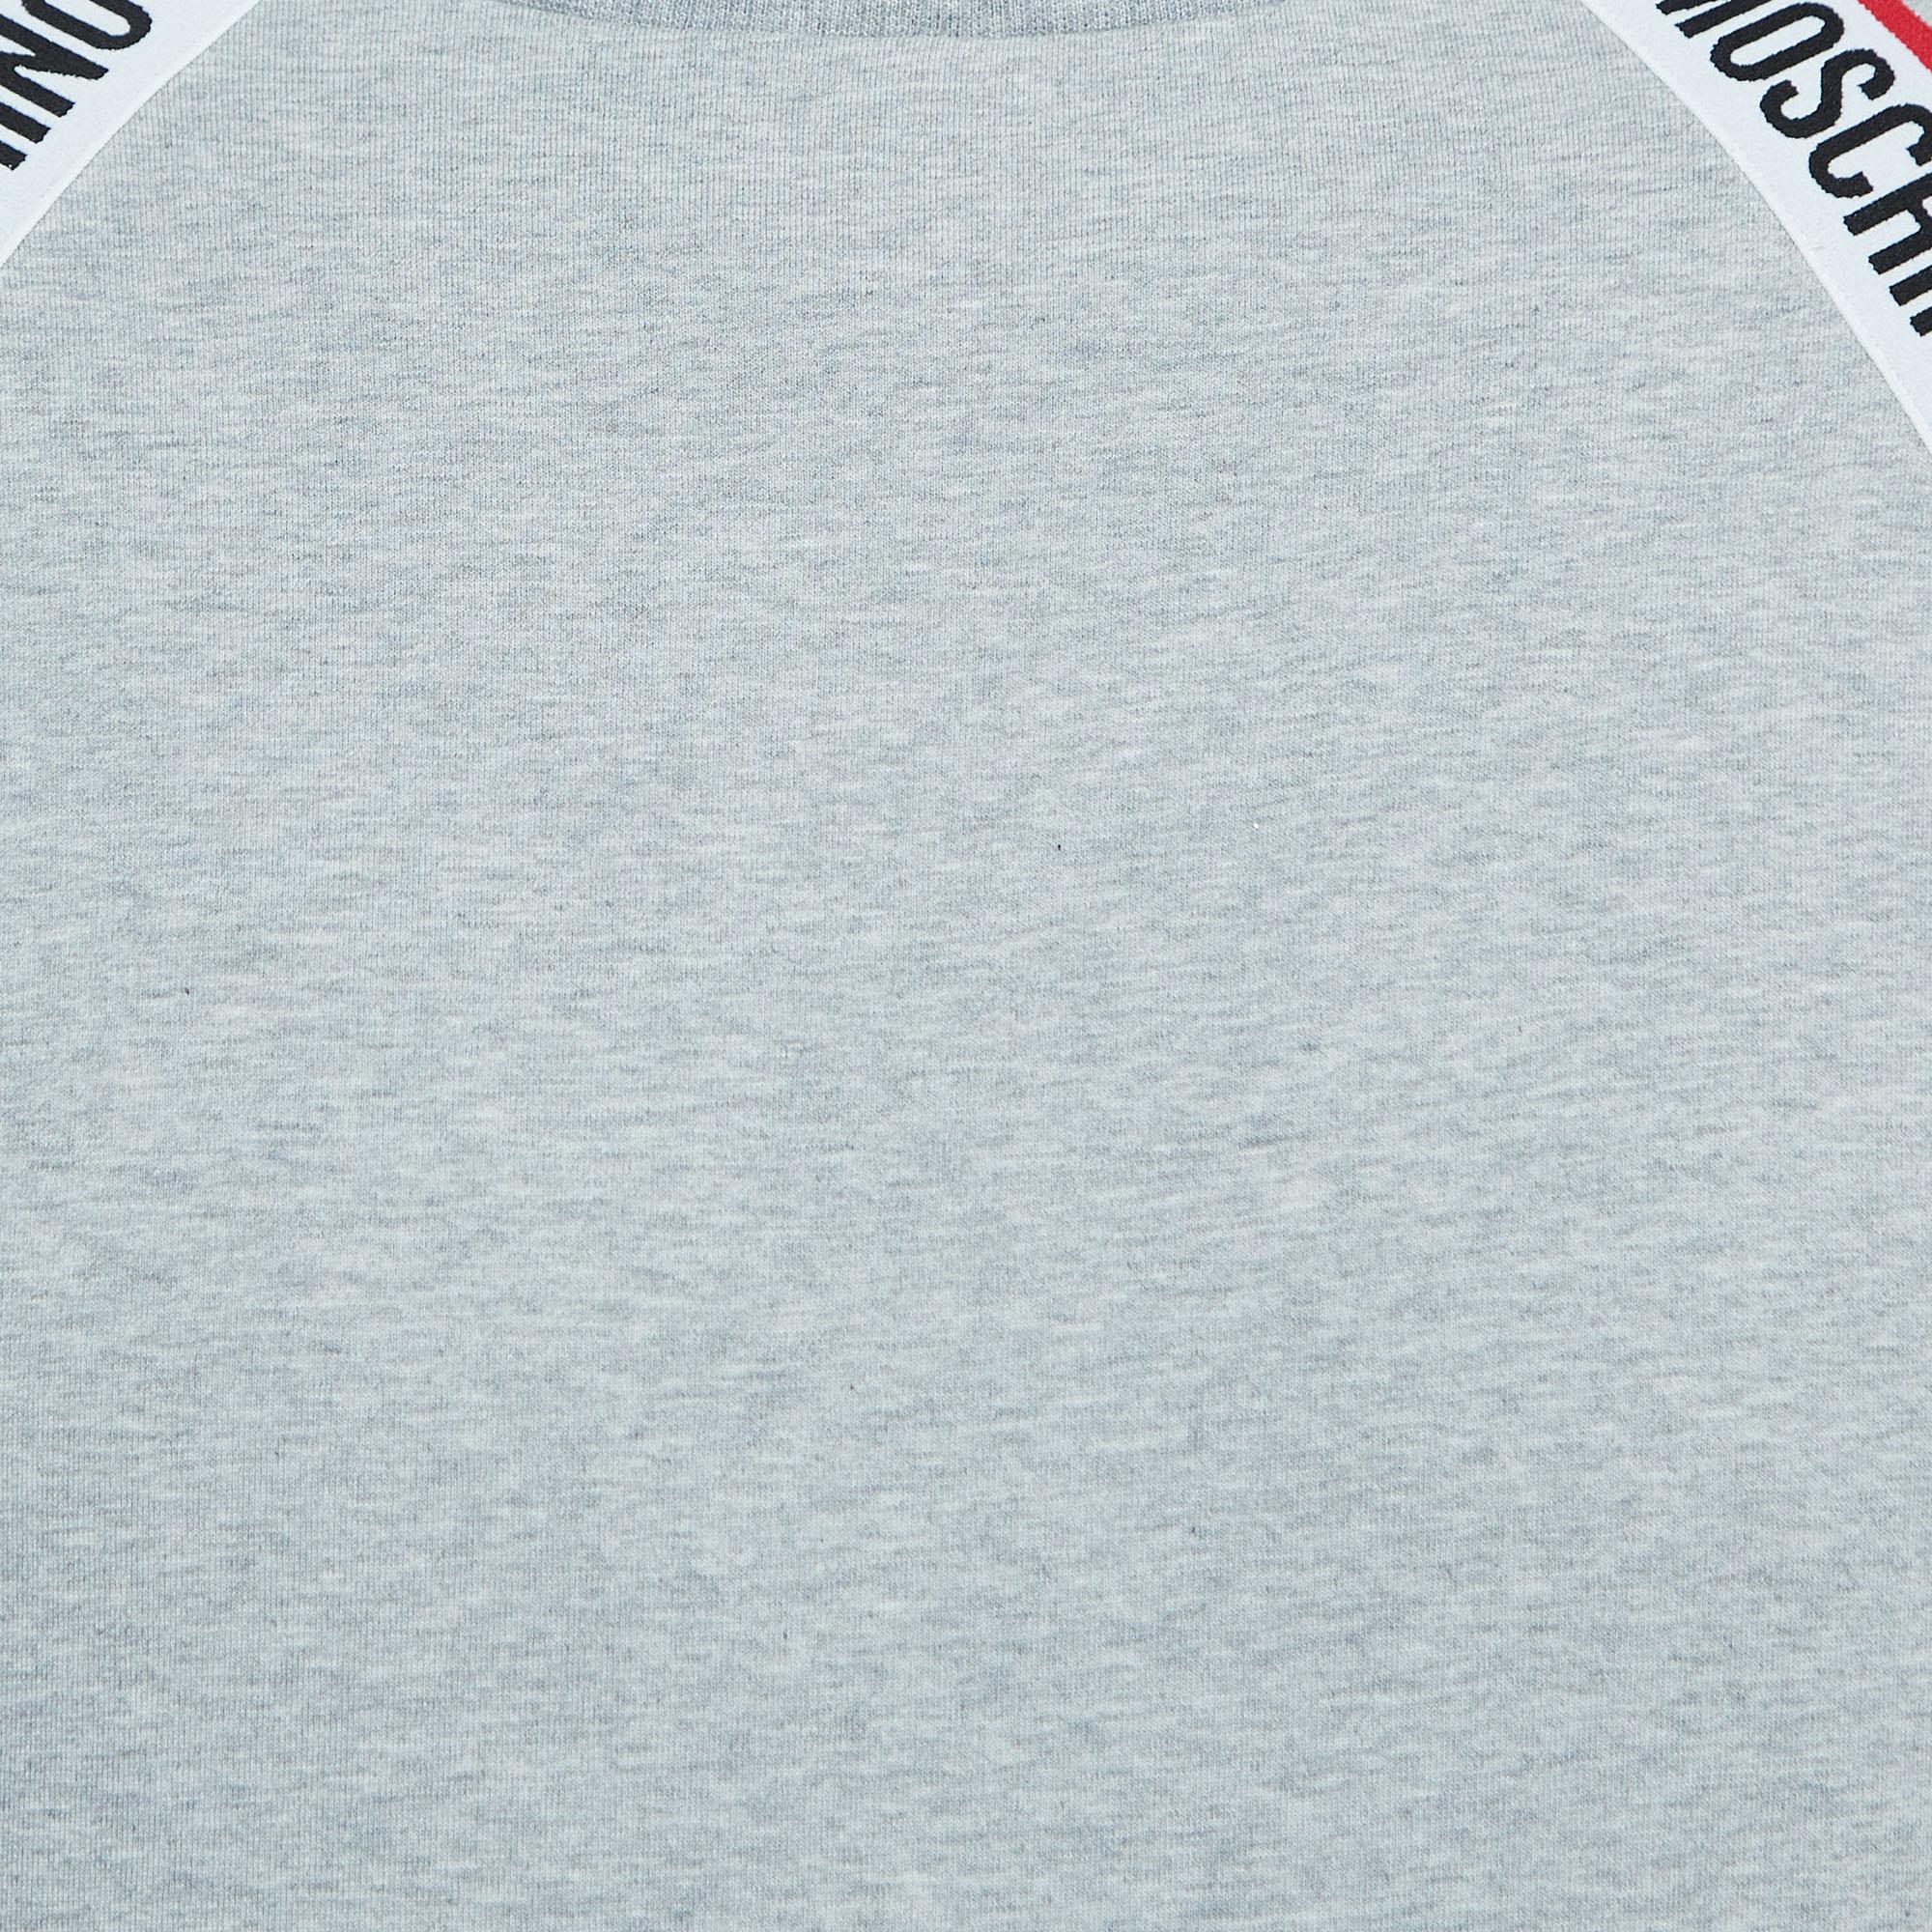 Moschino Underwear Grey Cotton Logo Tape Detail Crew Neck Sweatshirt S In New Condition For Sale In Dubai, Al Qouz 2